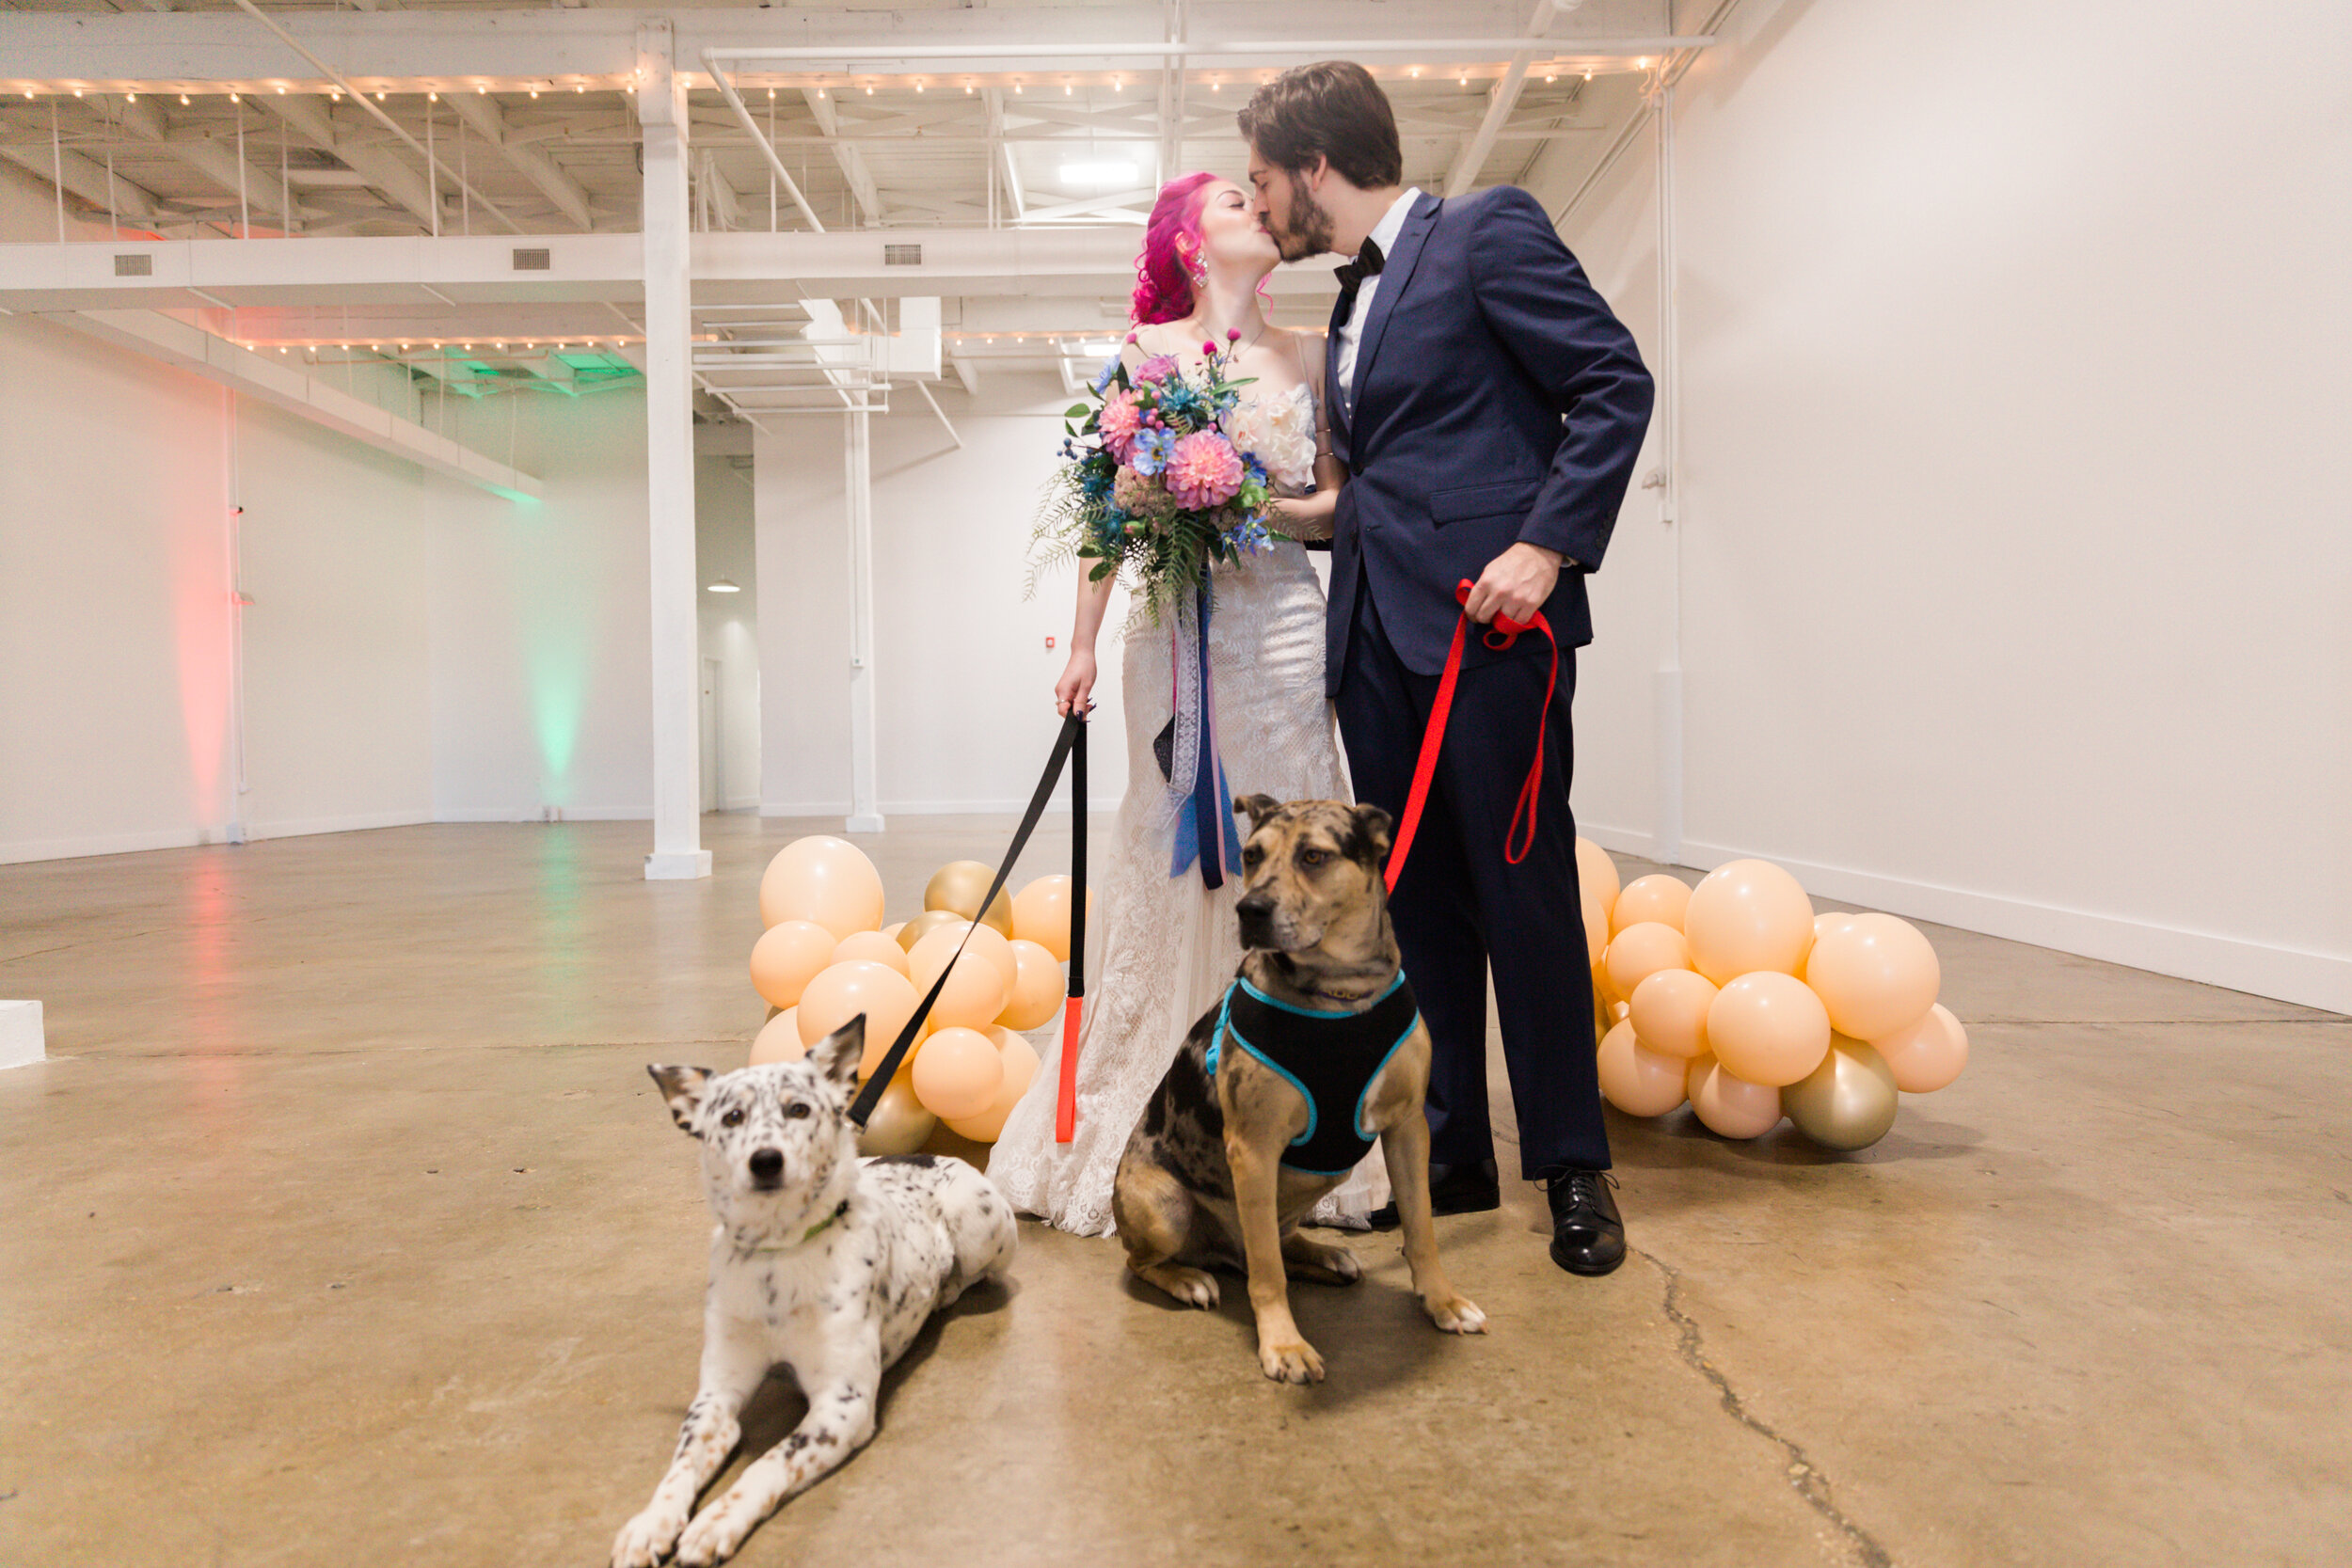 haven street ballroom wedding with puppies best baltimore photographers megapixels media photography-71.jpg